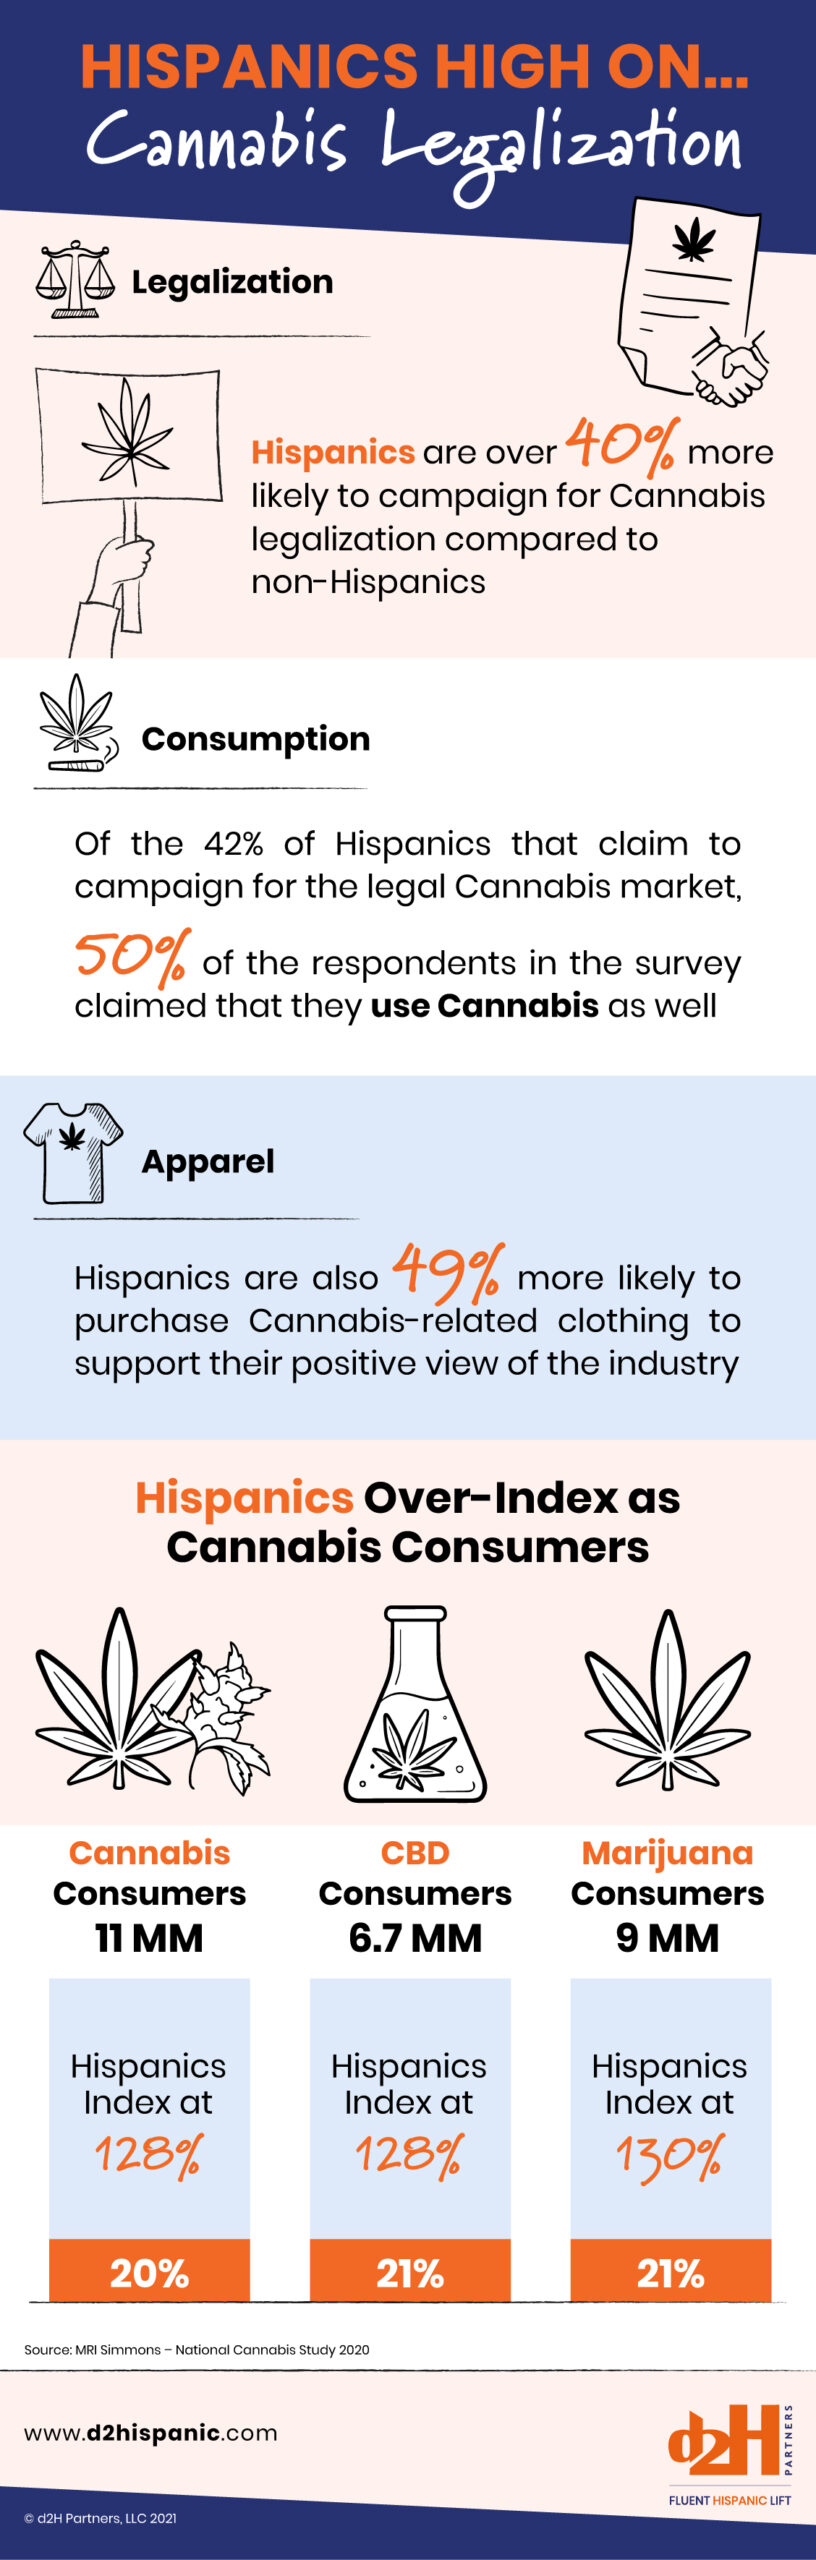 Hispanics High on Cannabis Legalization